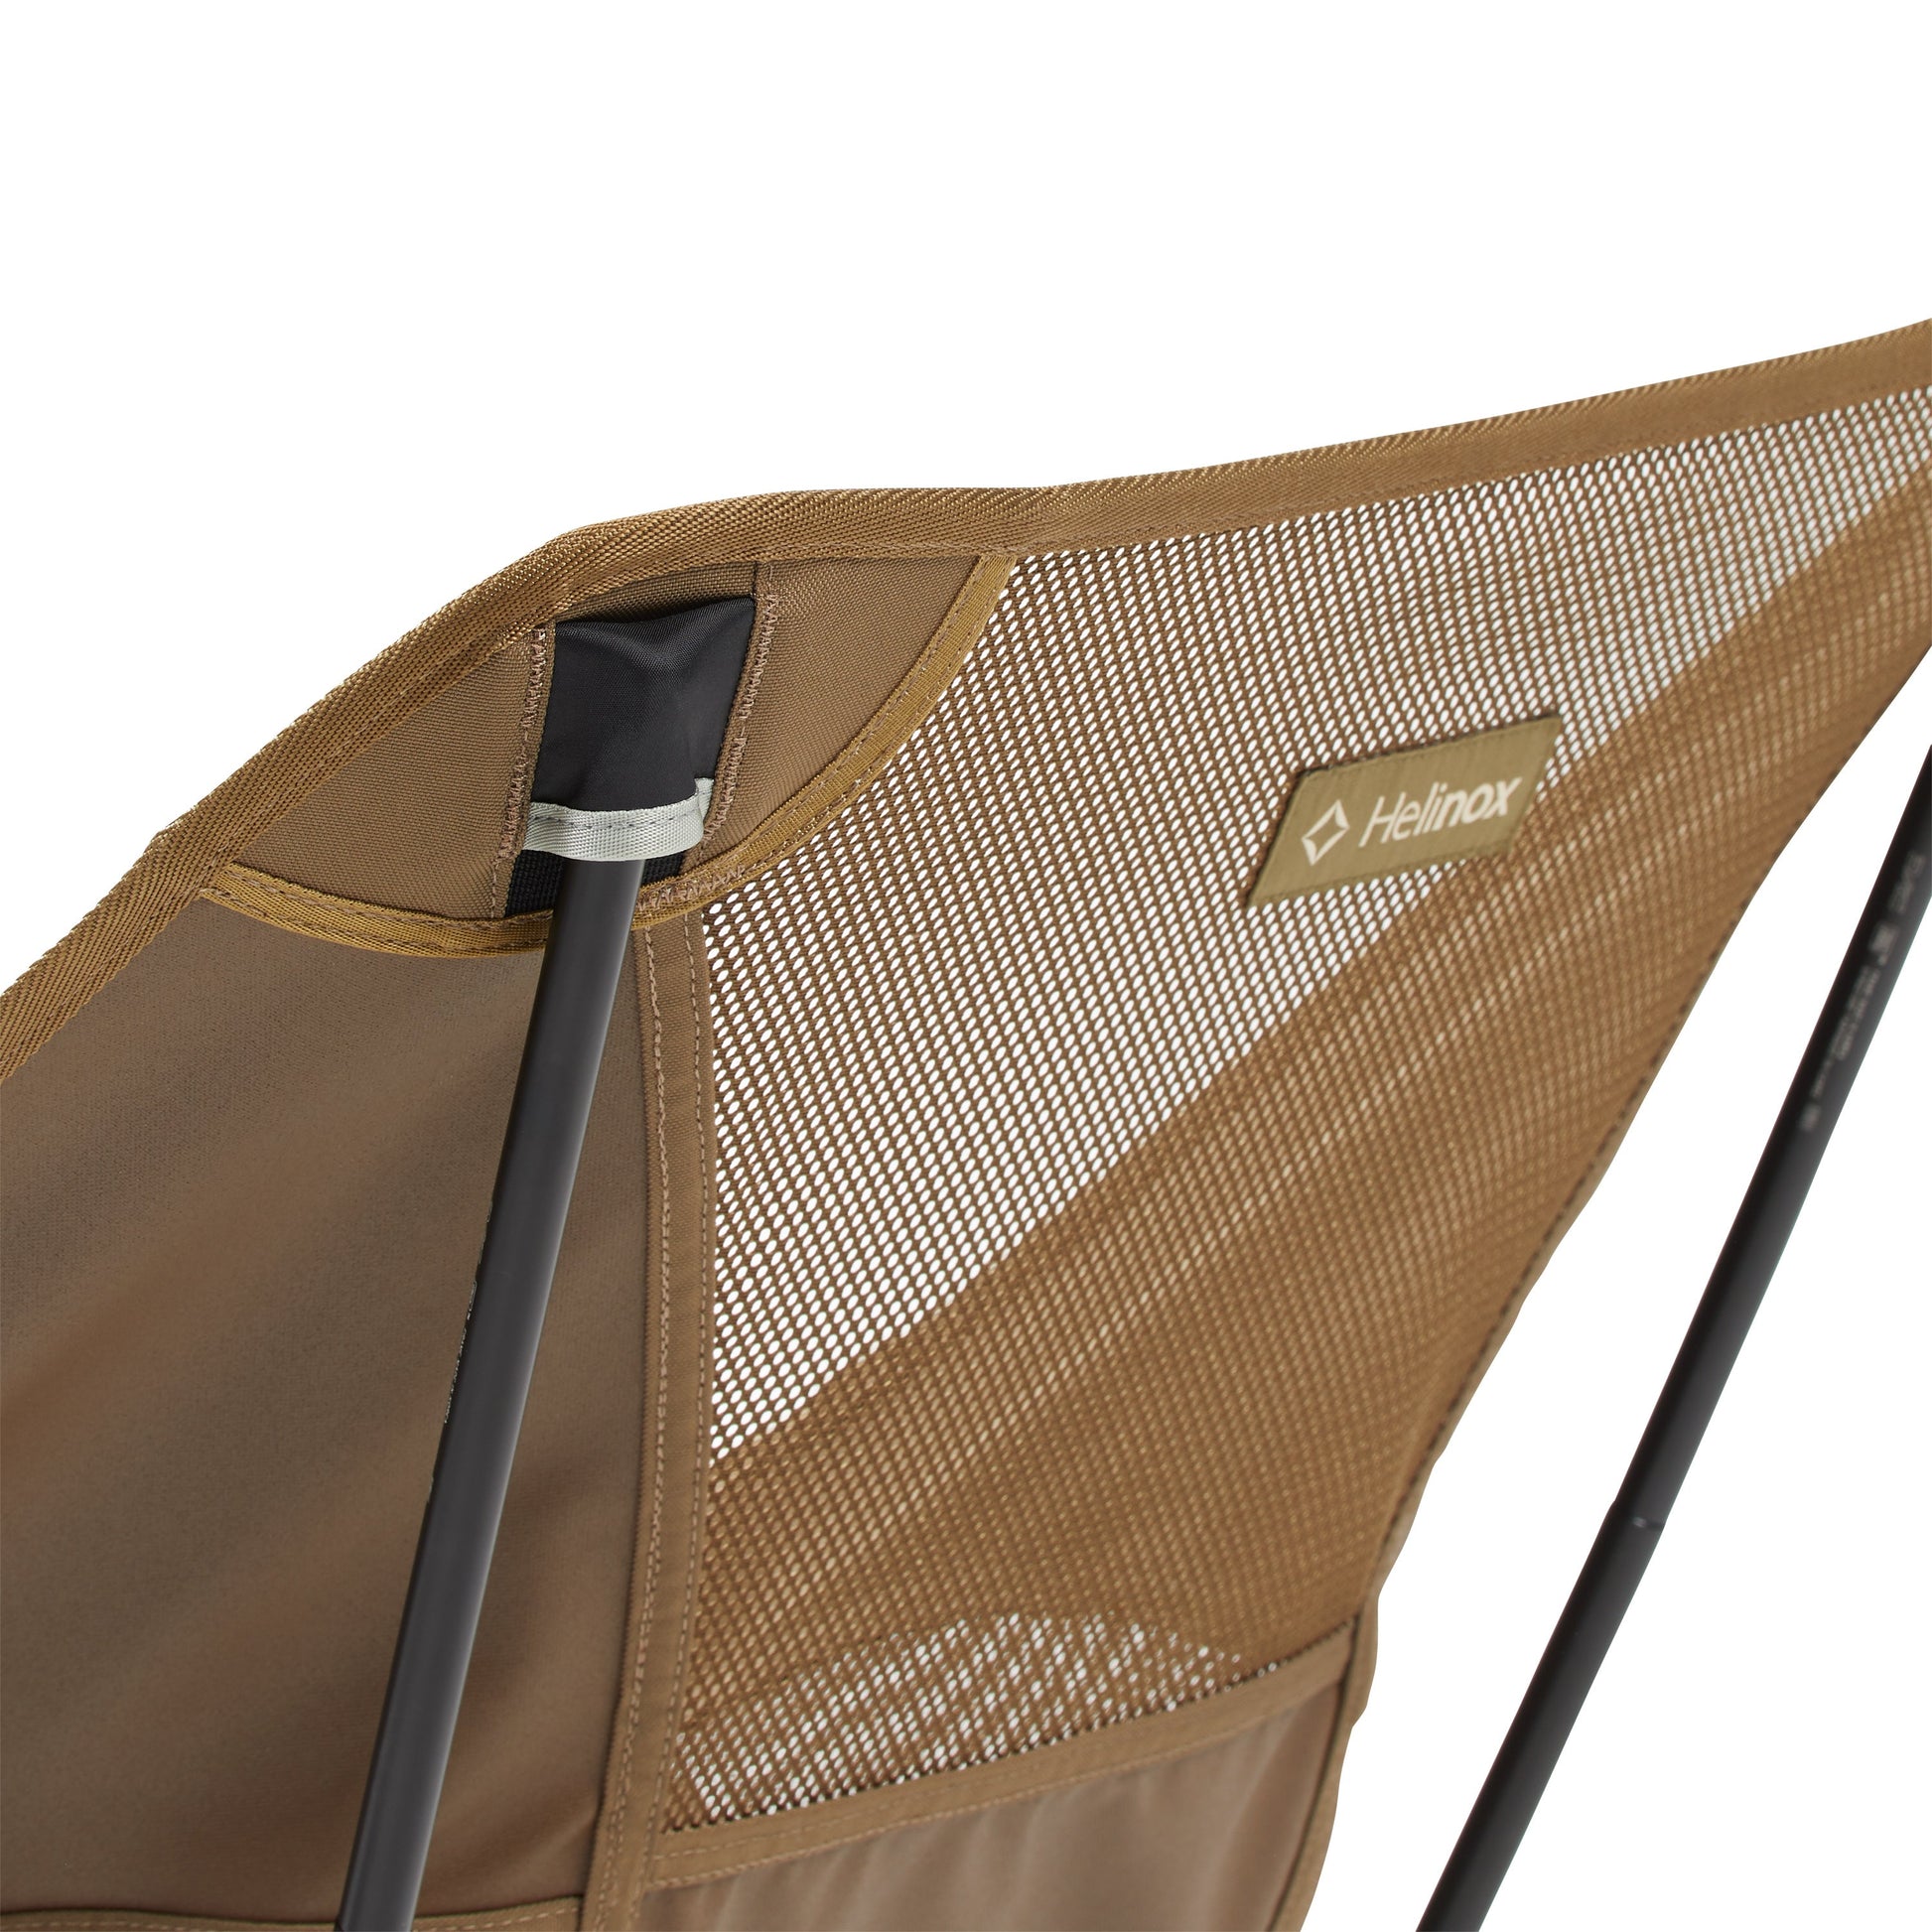 Helinox Chair One - Coyote Tan | Coffee Outdoors